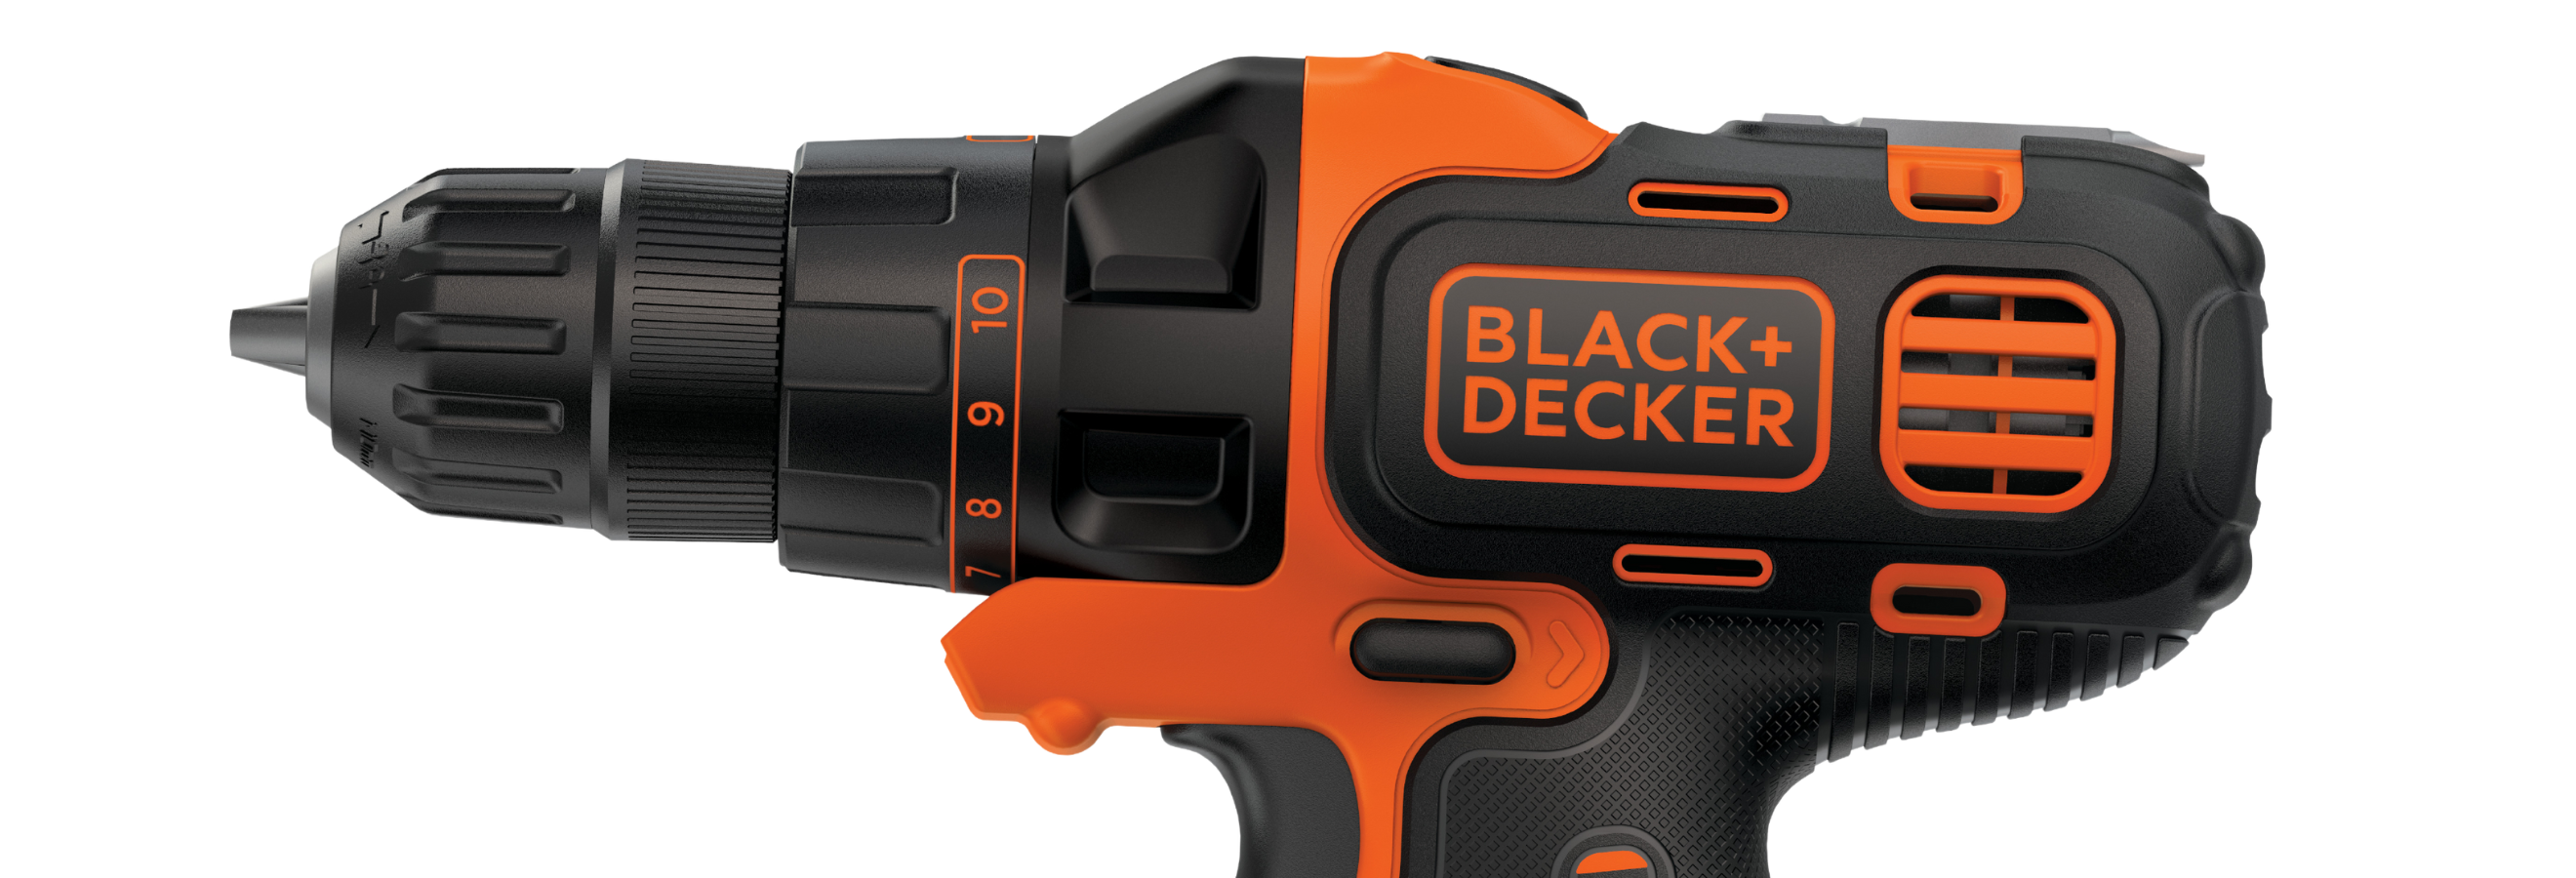  BLACK+DECKER BLACK+DECKER MATRIX 20V MAX* Drill Kit with  Storage Case (BDCDMT120WCSTFF) : Tools & Home Improvement